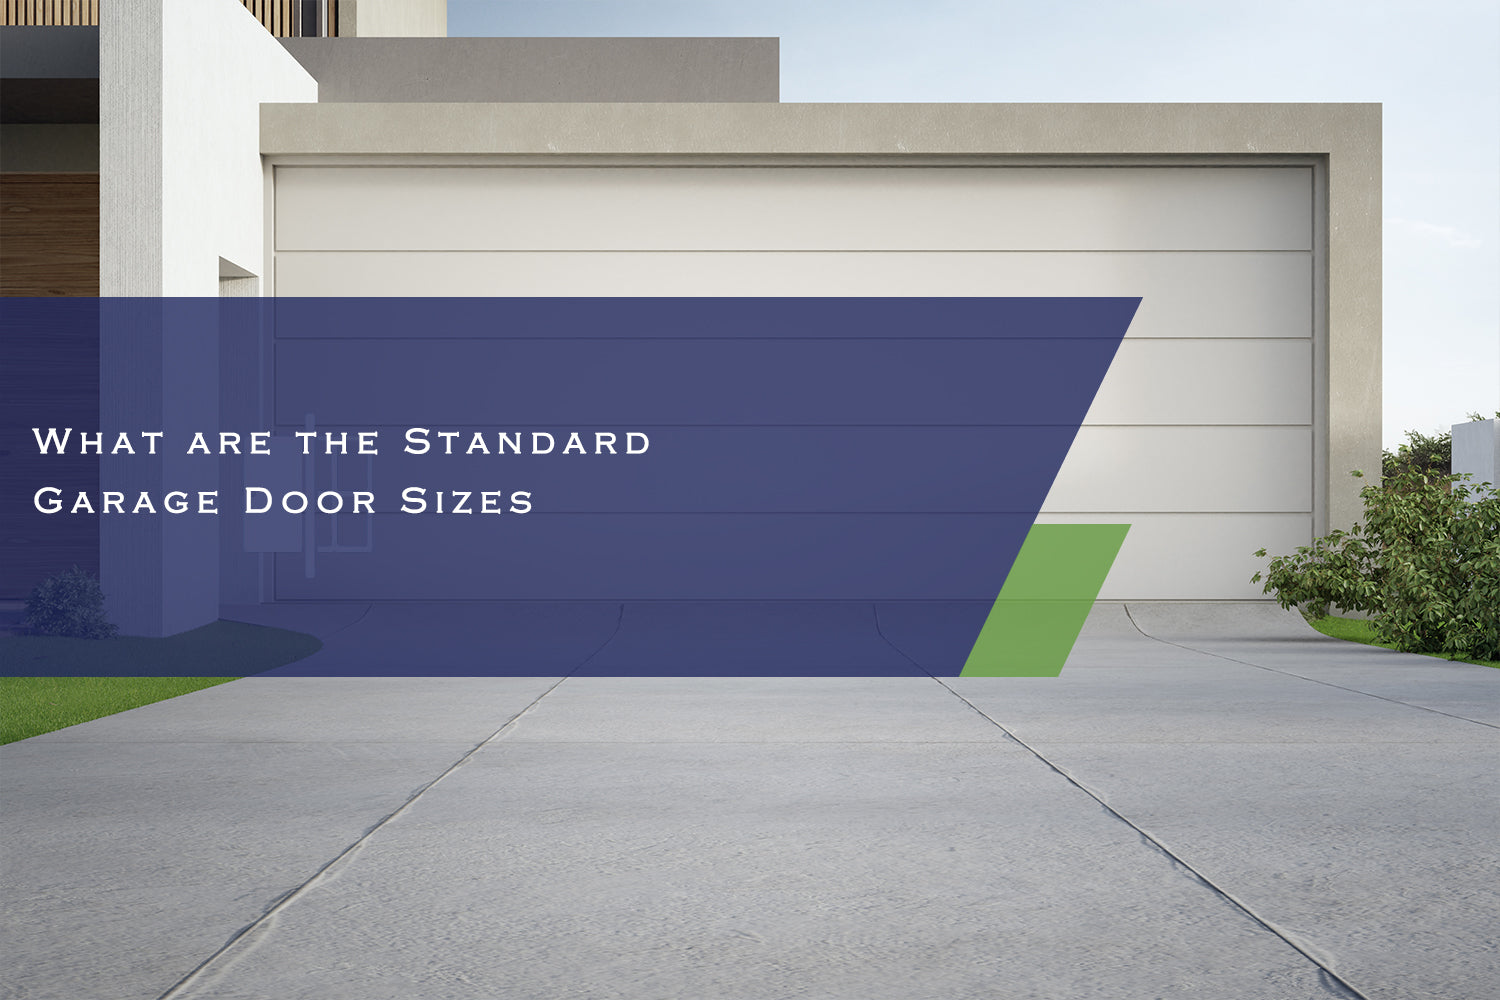 What are the Standard Garage Door Sizes